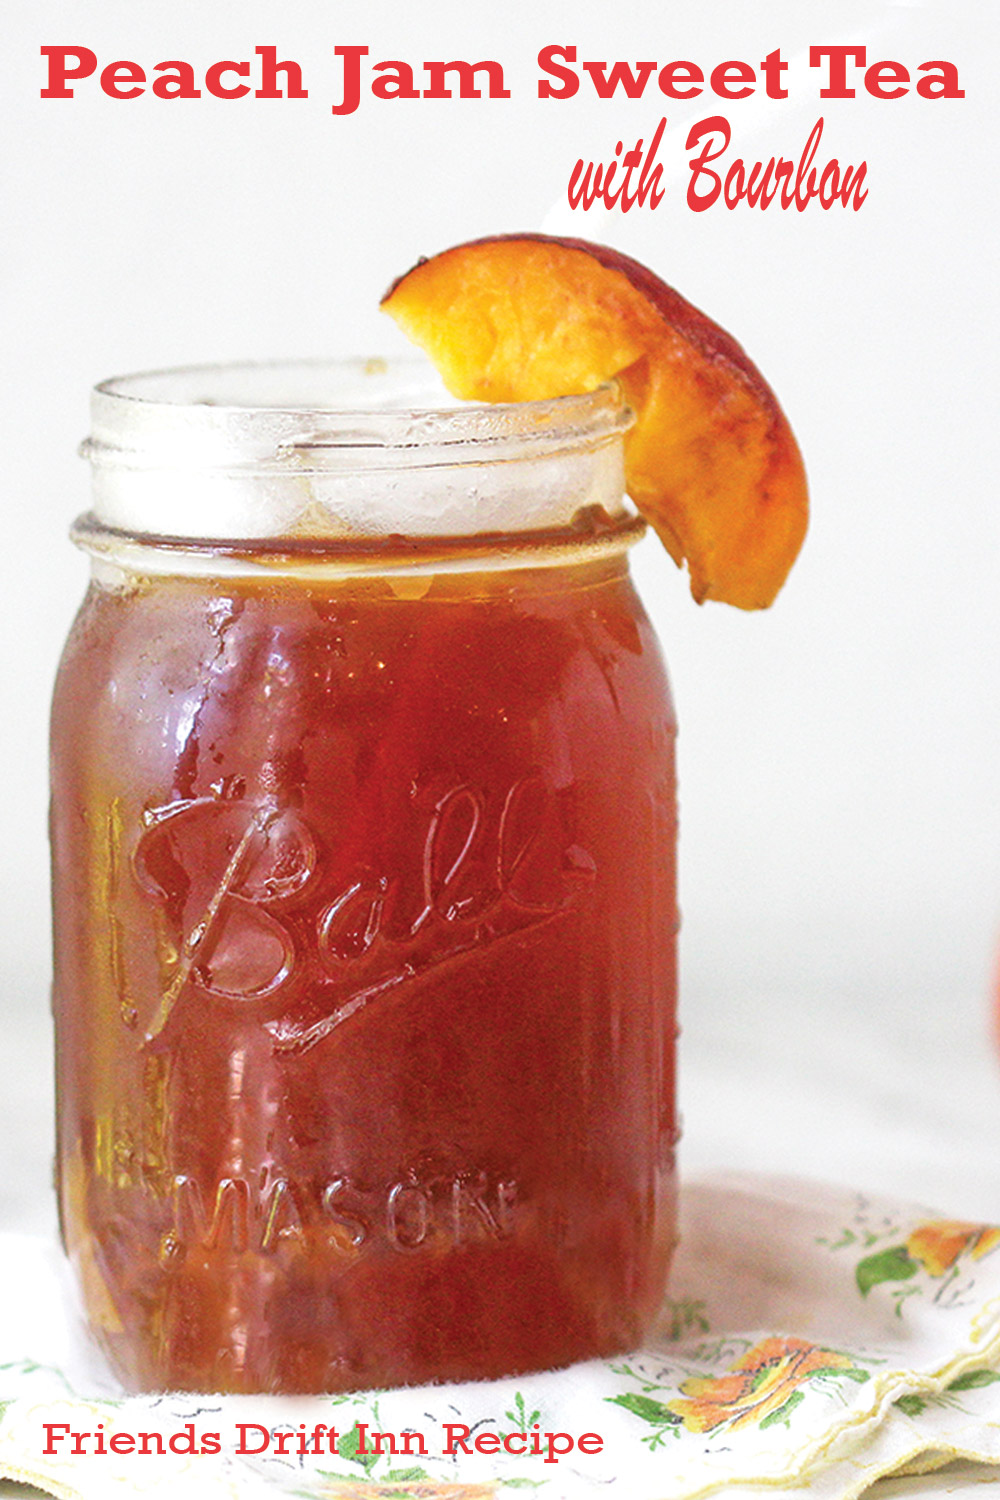 Peach Jame Sweet Tea with Bourbon mason jar cocktail recipe